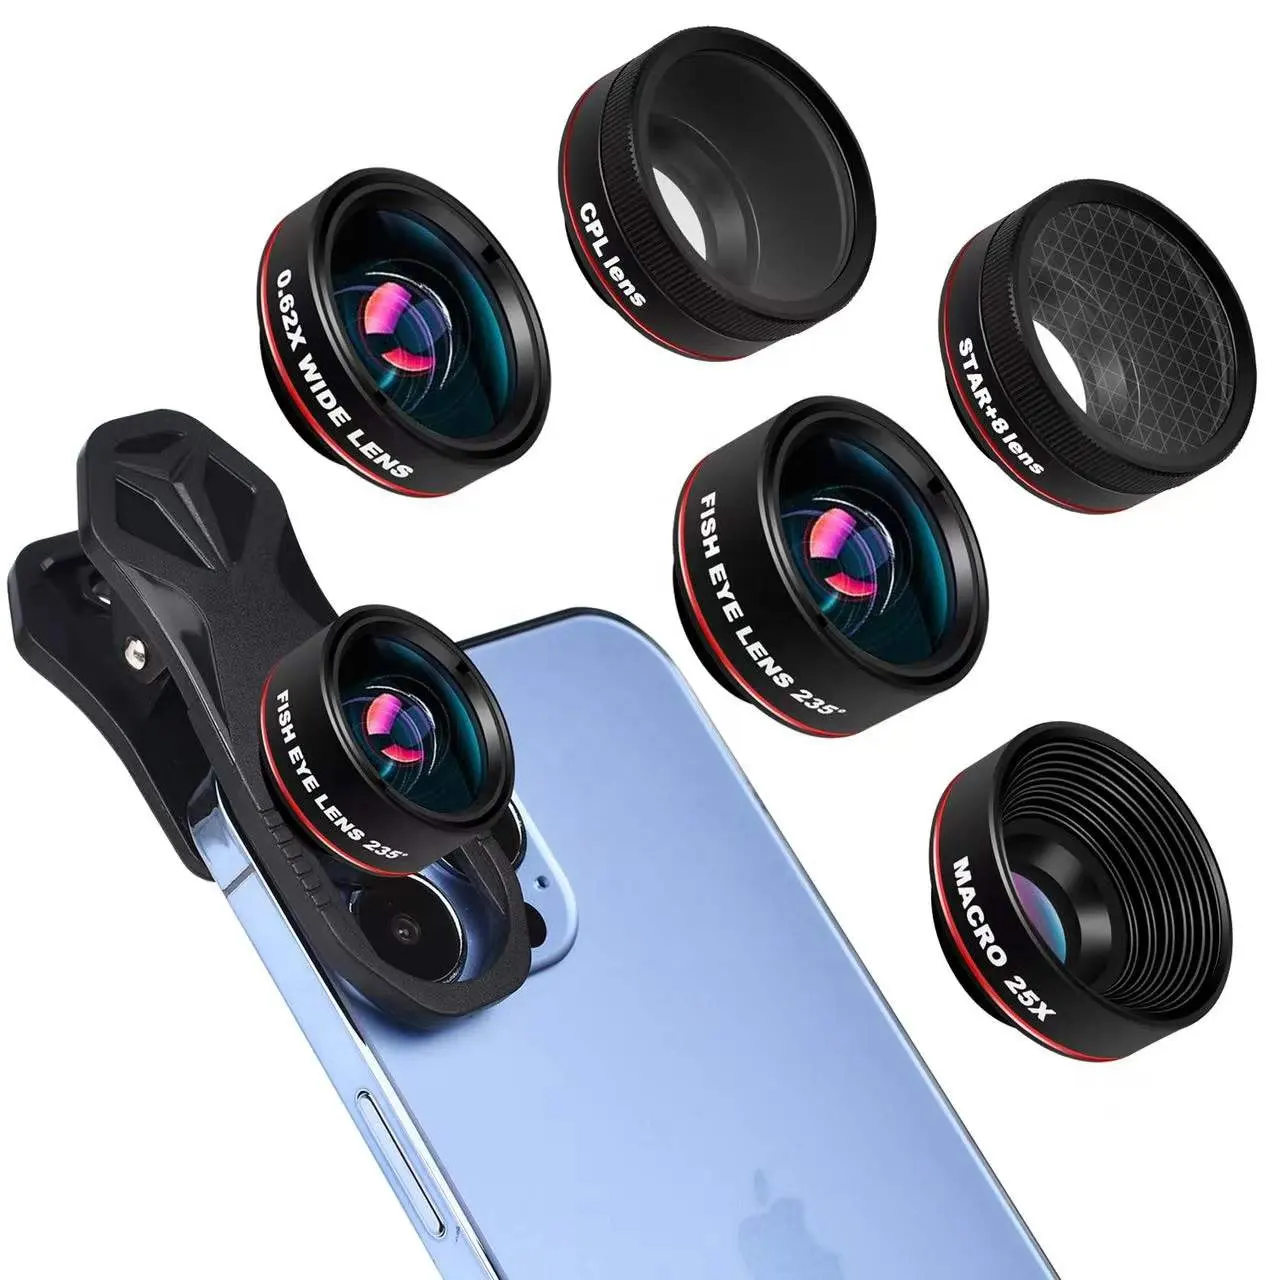 Lente de ojo de pez 5 en 1 para iPhone, Samsung Pixel, BlackBerry, etc., con Clip, lente de teléfono móvil, fotos divertidas, 180